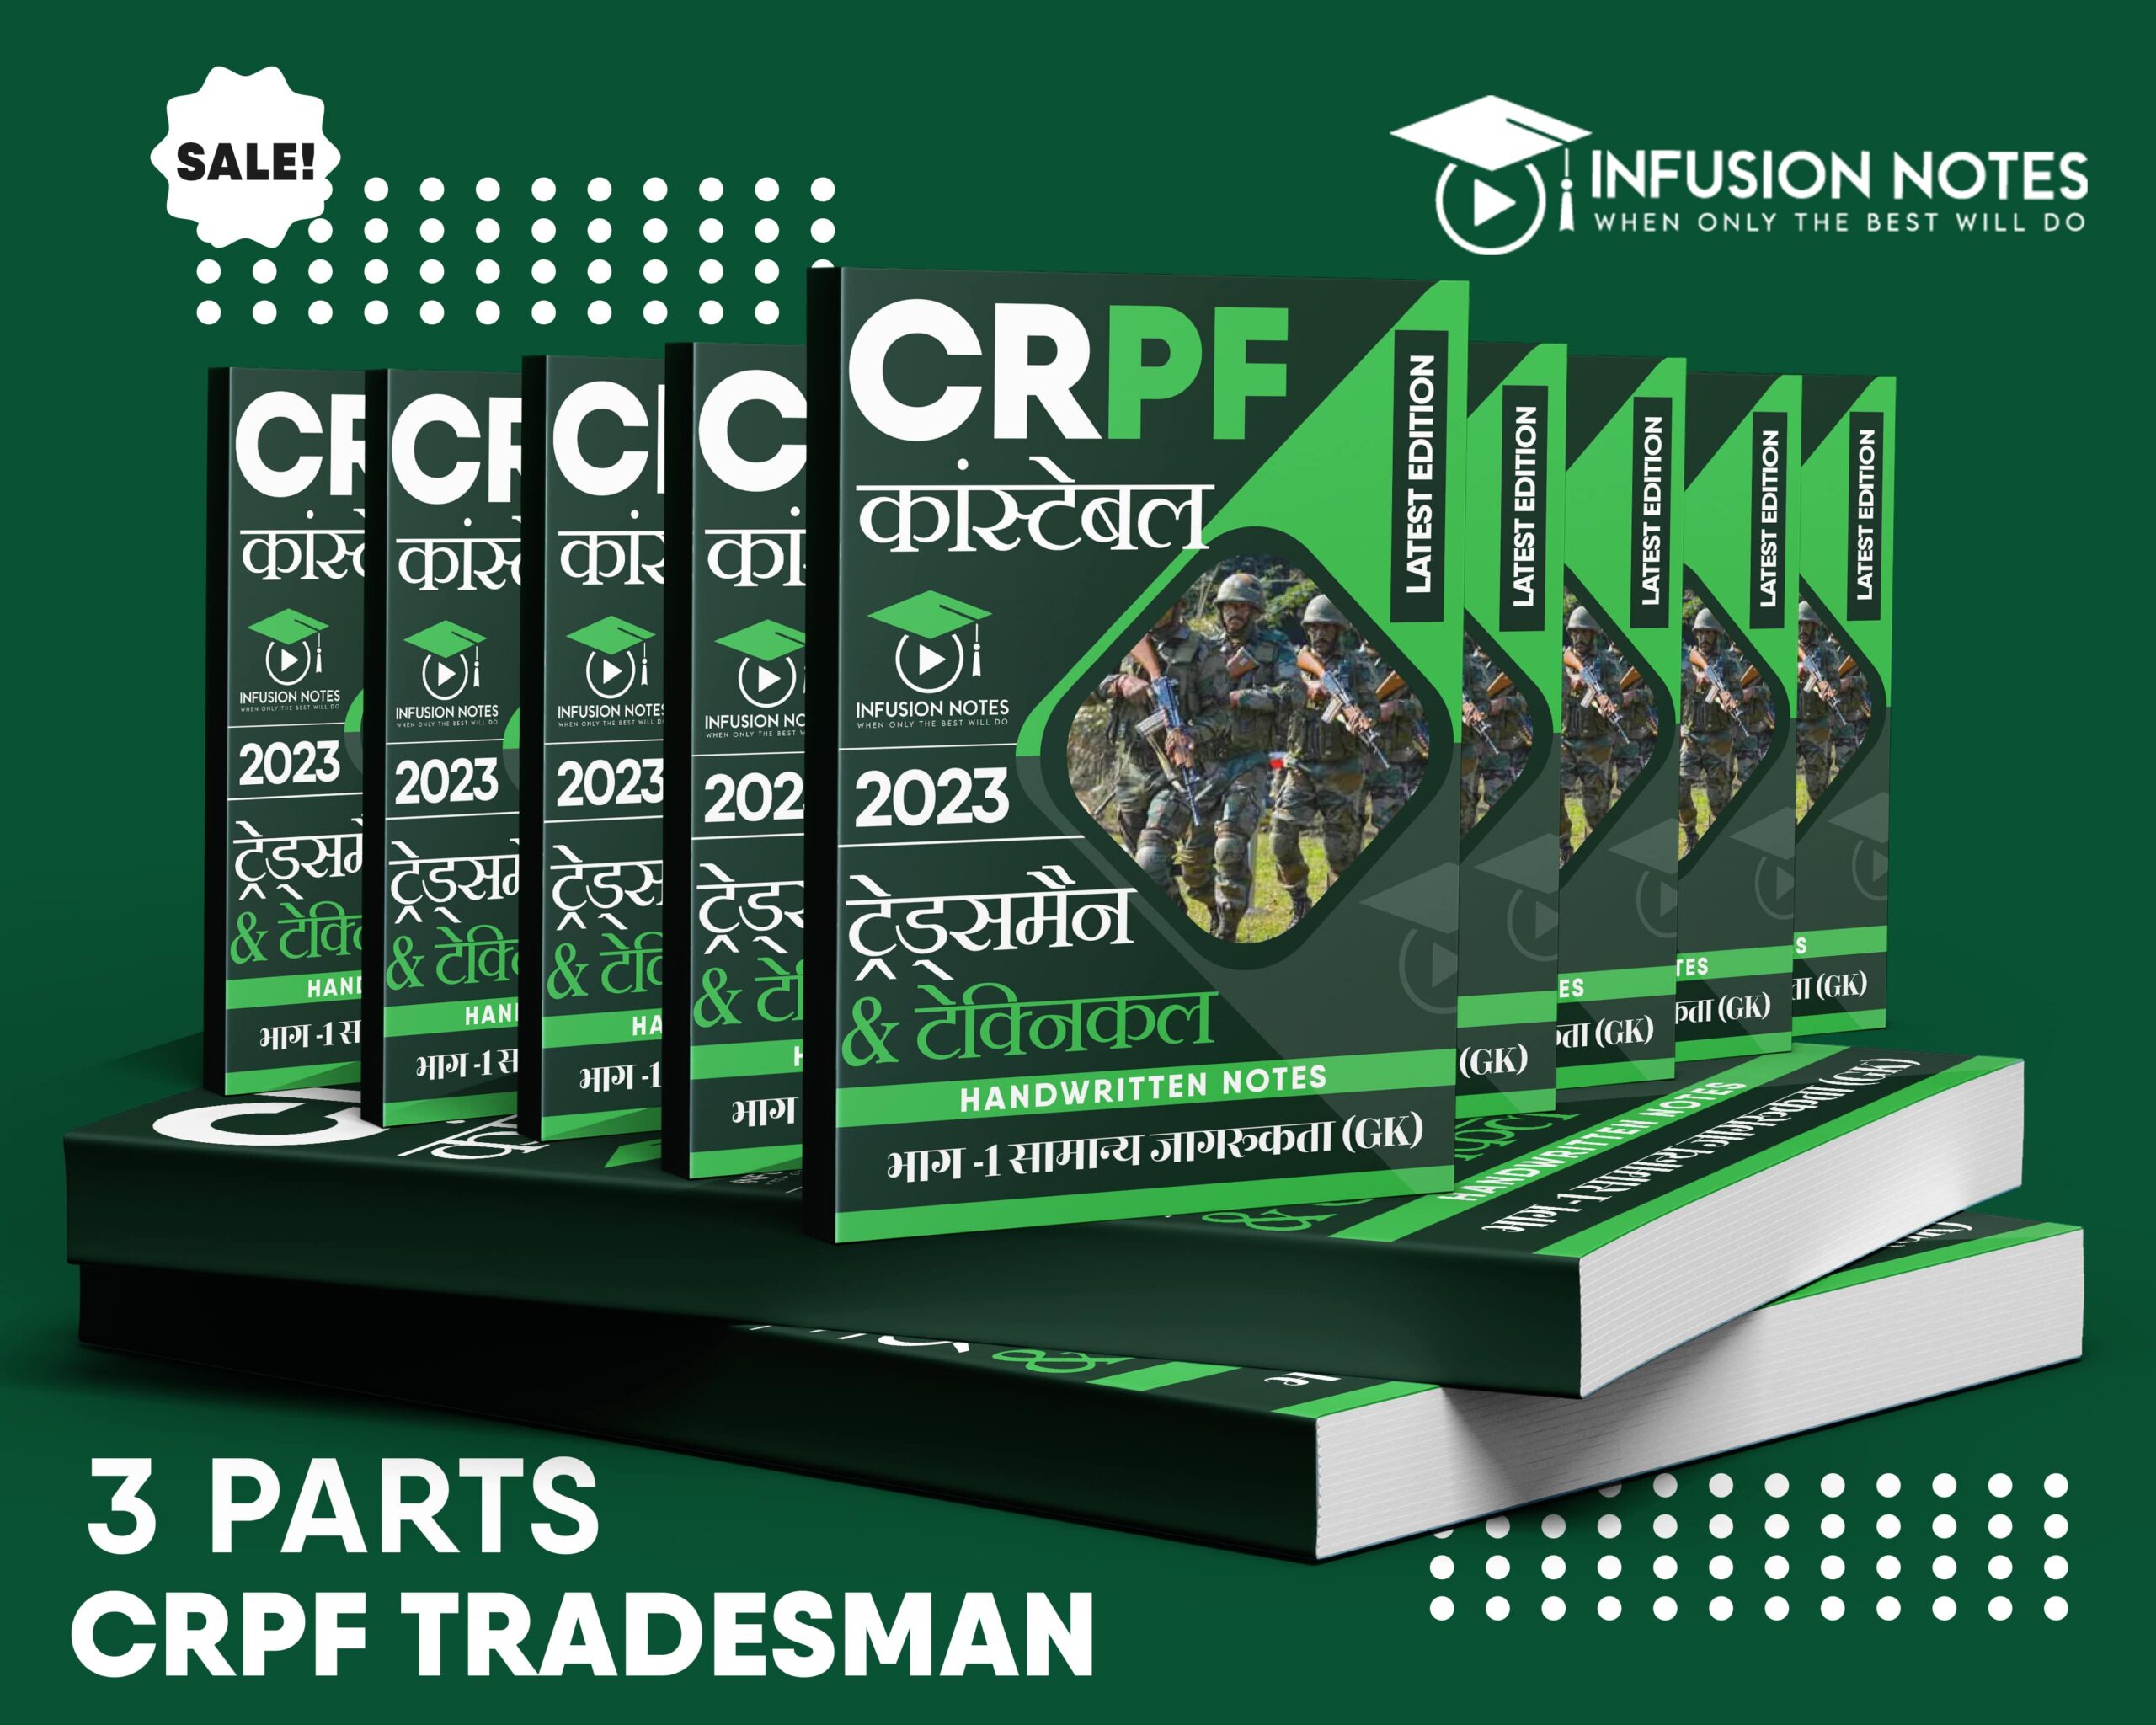 CRPF Tradesman Image